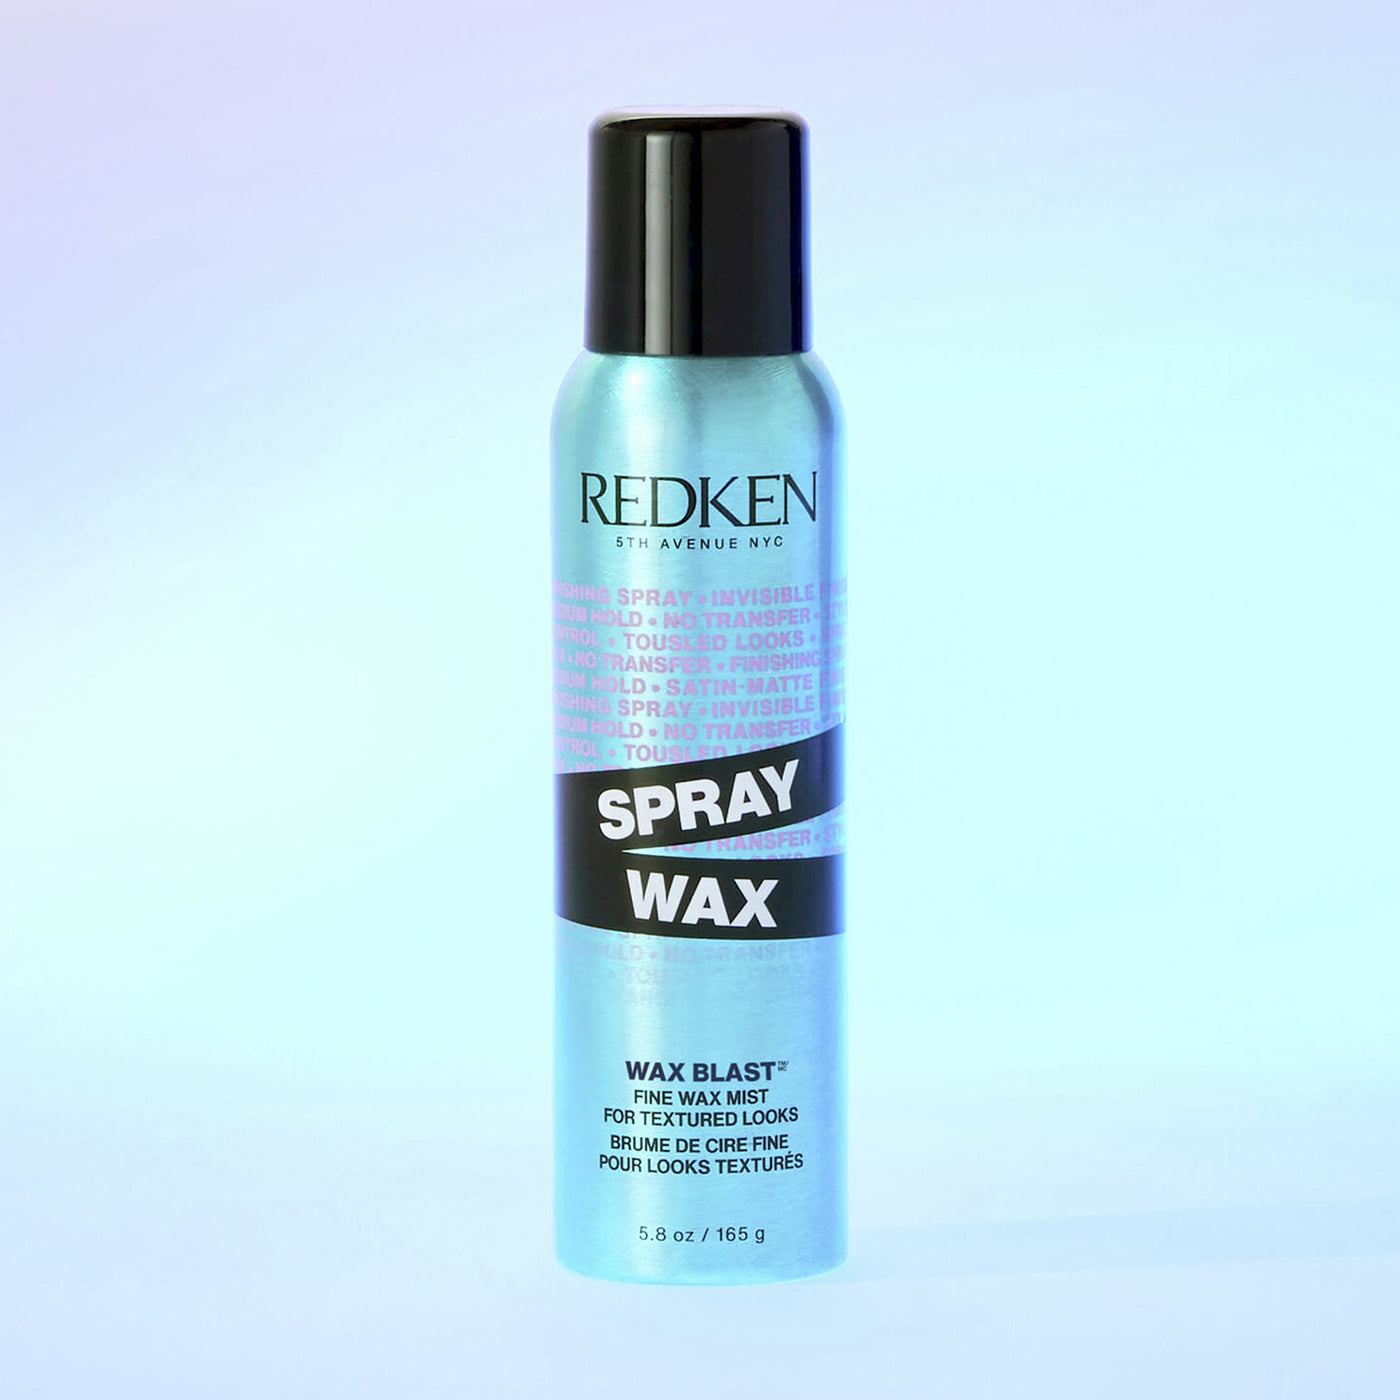 Redken Spray Wax (165g) styled